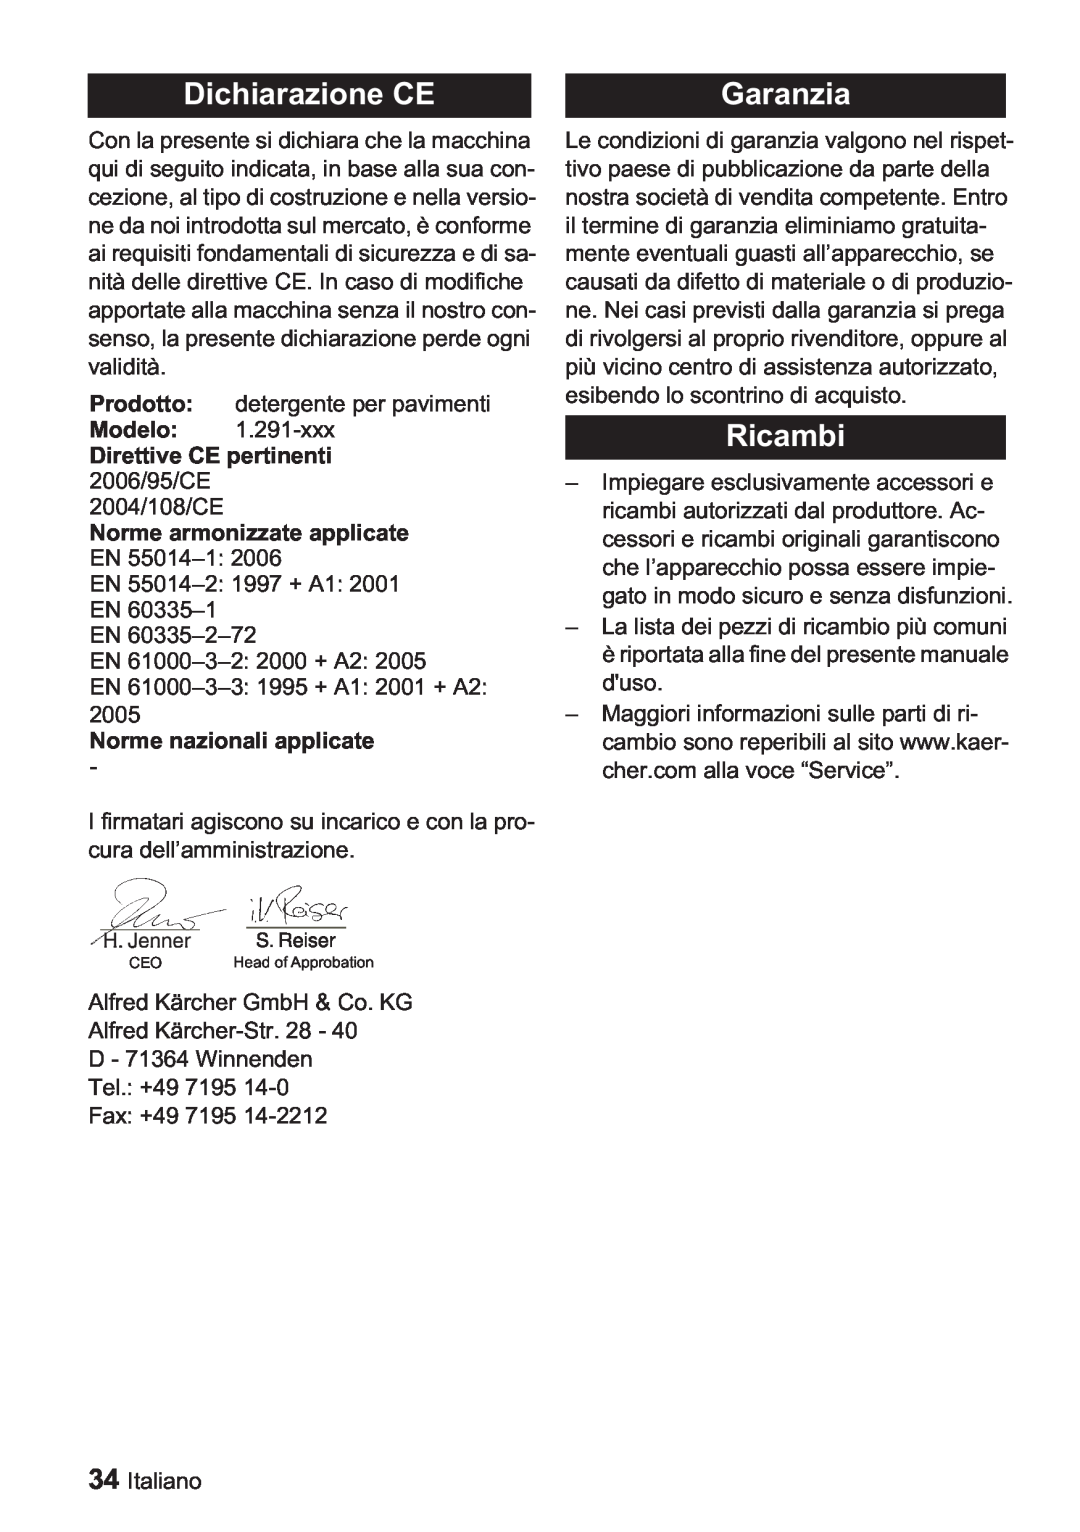 Karcher BDP 1500, BDP 50 manual Dichiarazione CE, Garanzia, Ricambi, Direttive CE pertinenti 2006/95/CE 2004/108/CE 